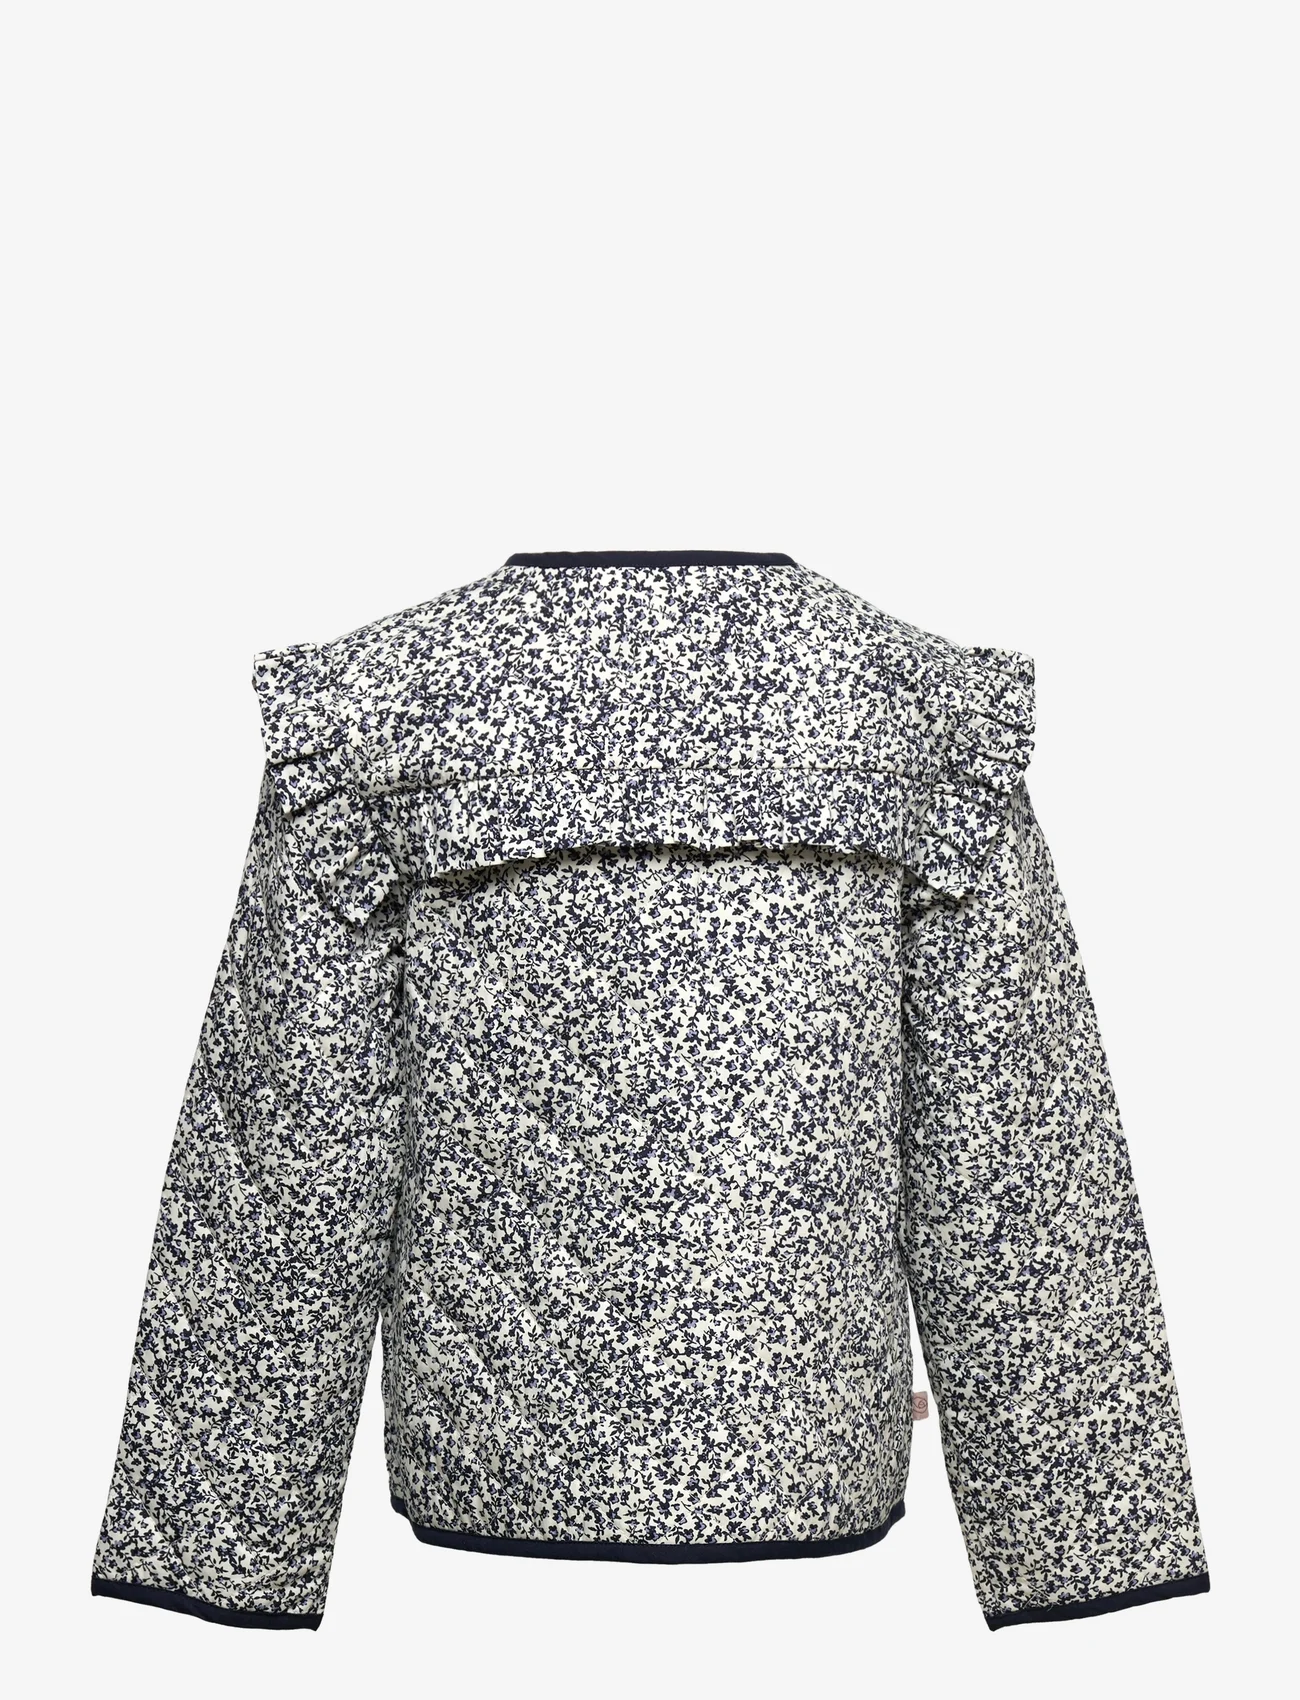 Rosemunde Kids - Organic jacket ls - ivory petit floral print - 1